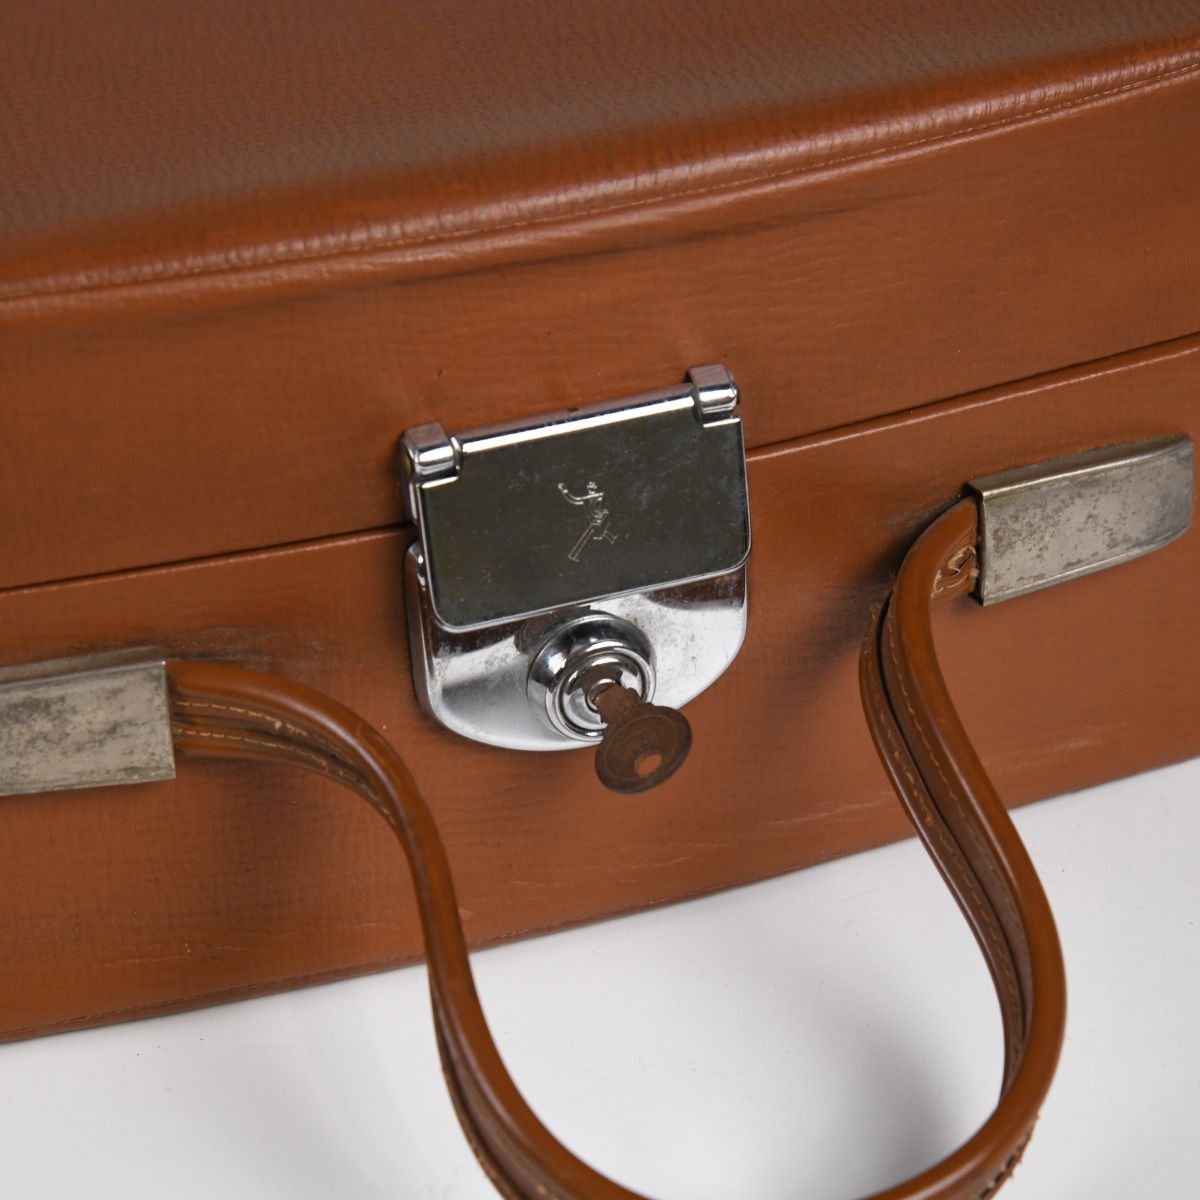 Vintage 1960s Brown Travel Suitcase